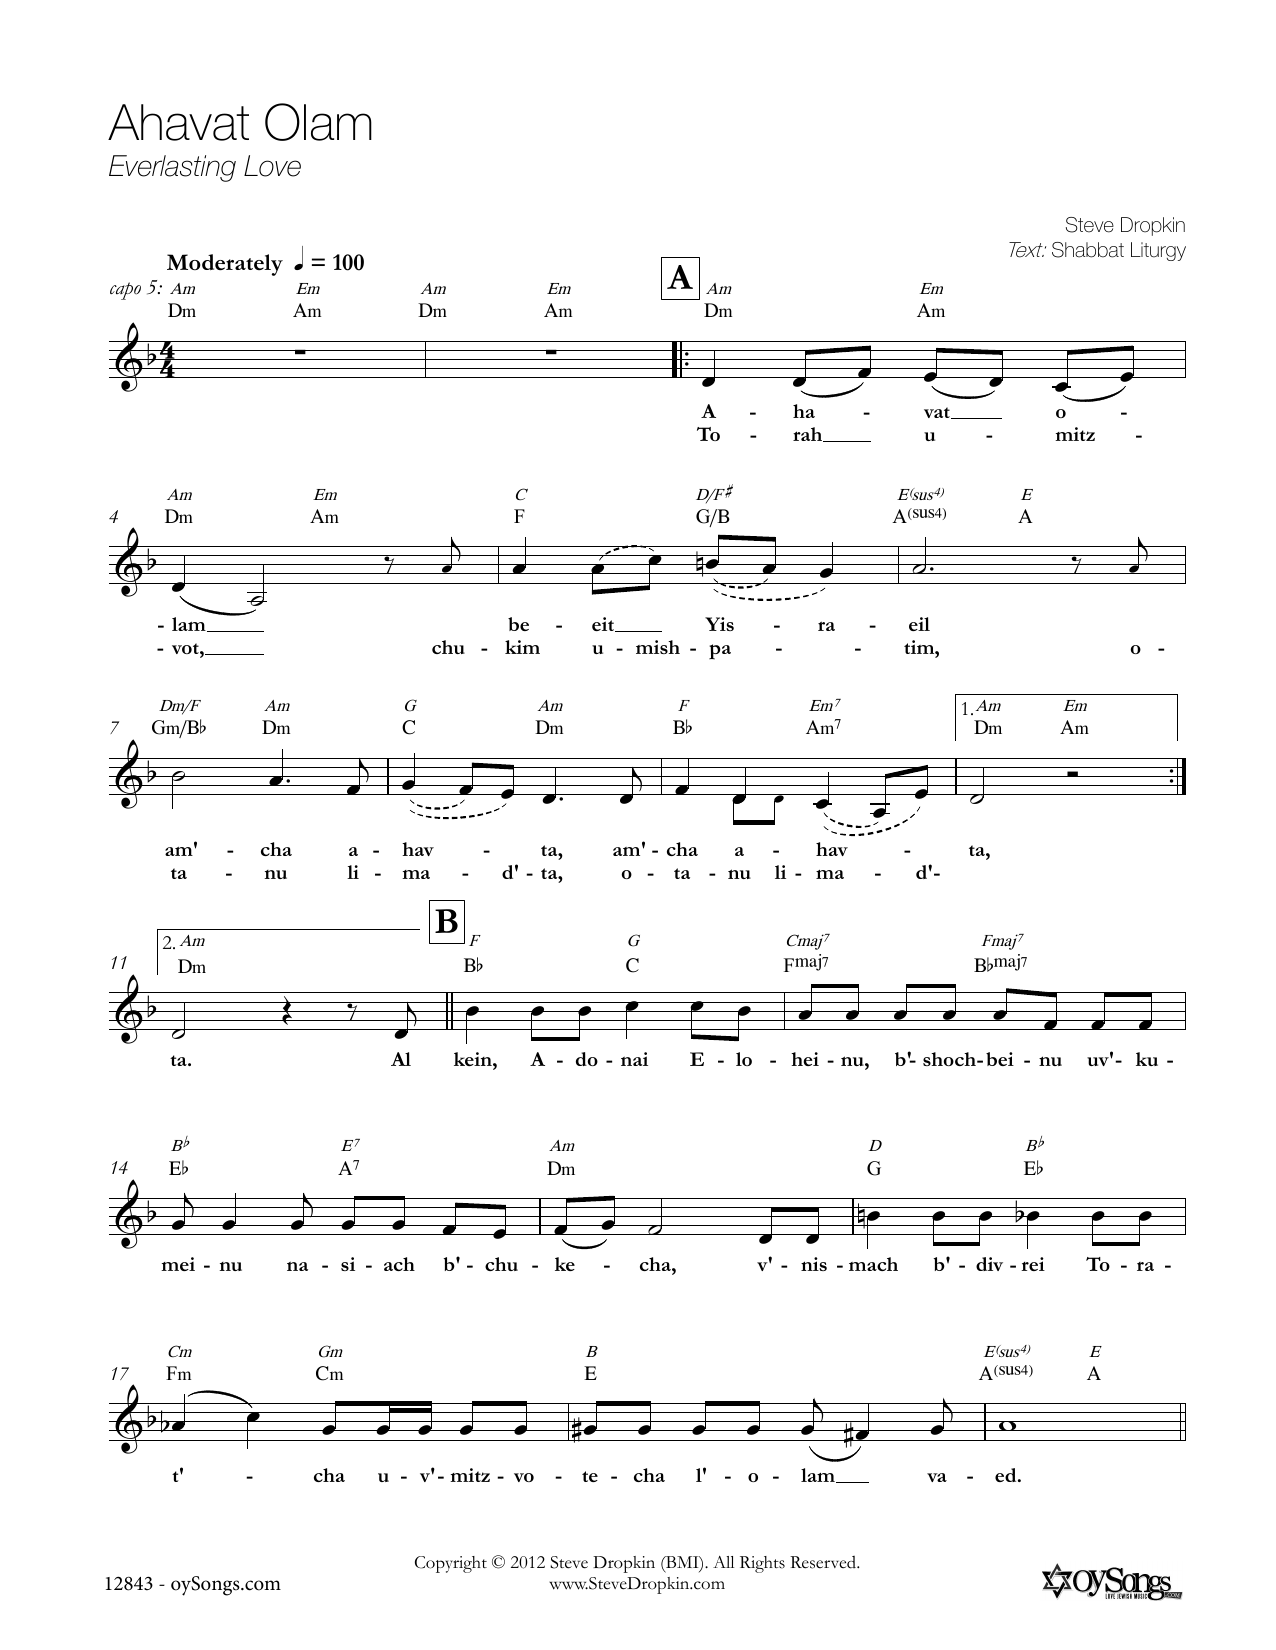 Steve Dropkin Ahavat Olam Sheet Music Notes & Chords for Melody Line, Lyrics & Chords - Download or Print PDF